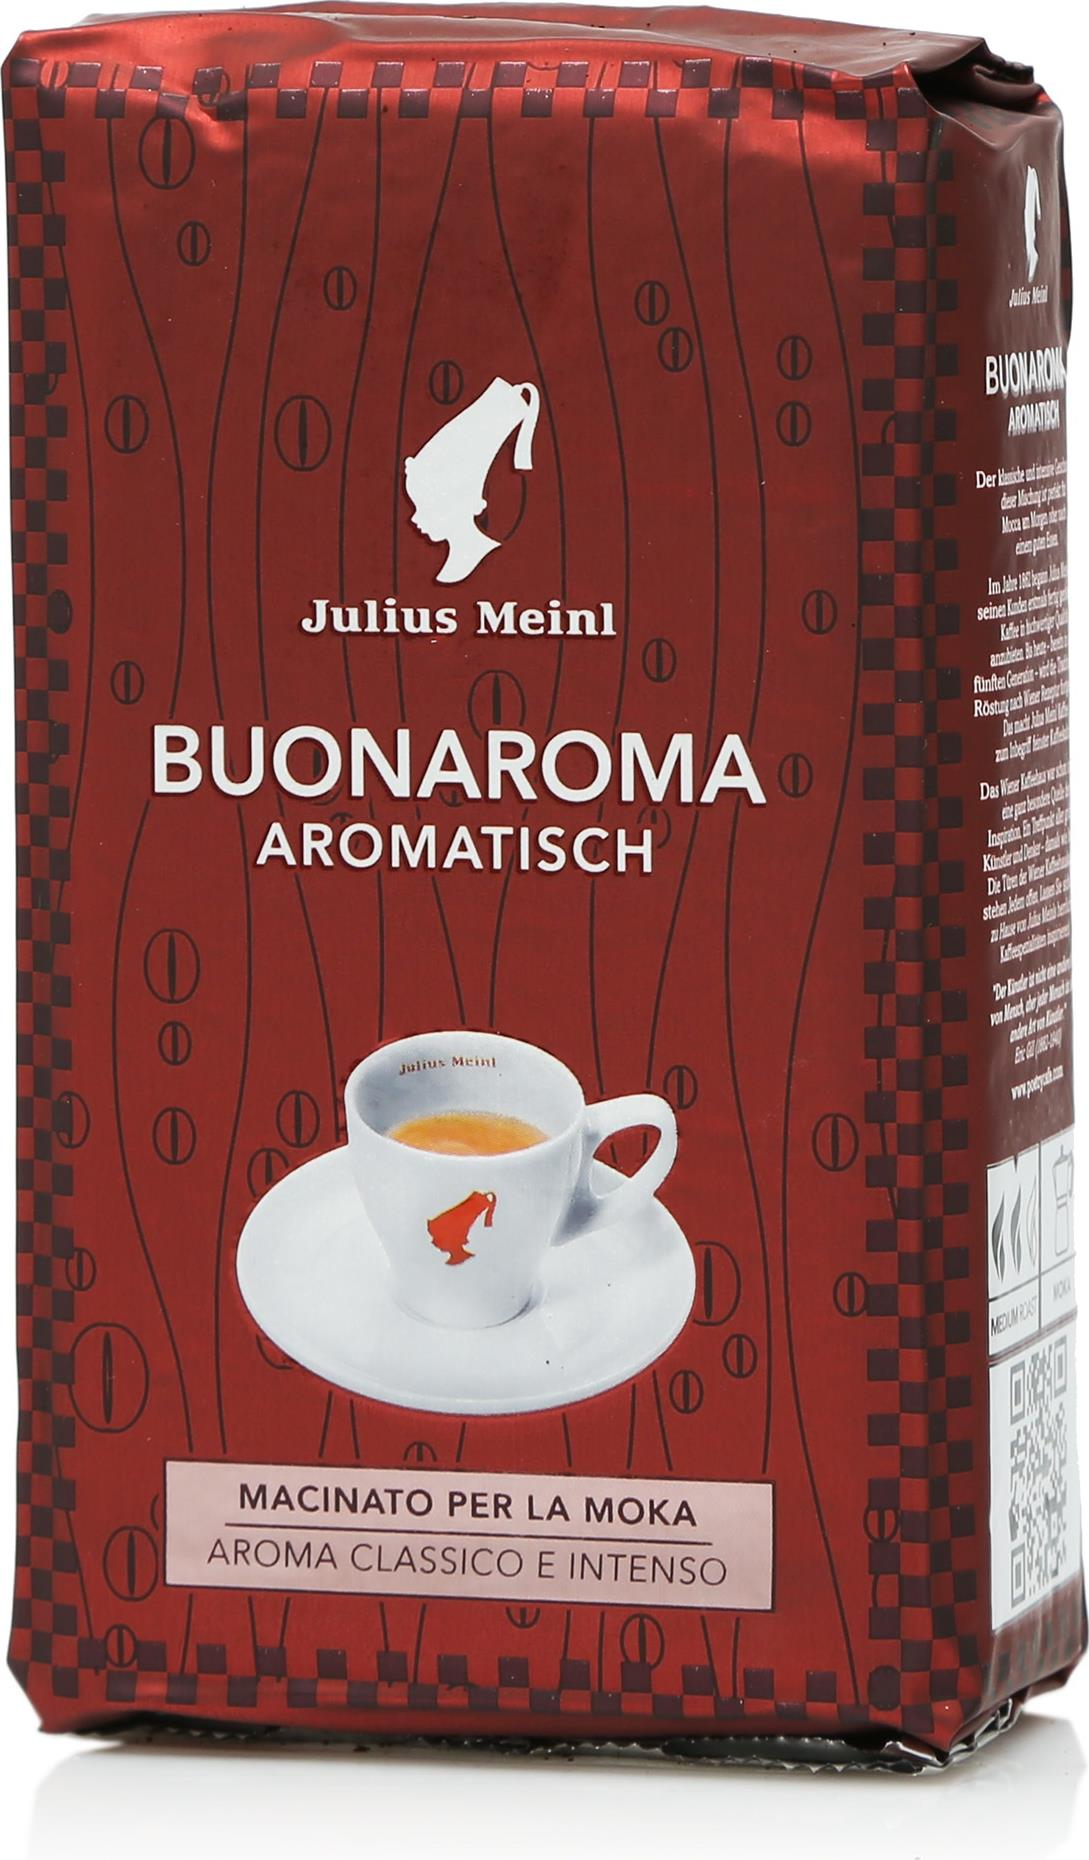 Julius кофе молотый. Джулиус Майнл кофе. Кофе молотый Julius Meinl buonaroma. Джулиус Майнл кофе молотый. Кофе молотый Julius Meinl Espresso buonaroma.